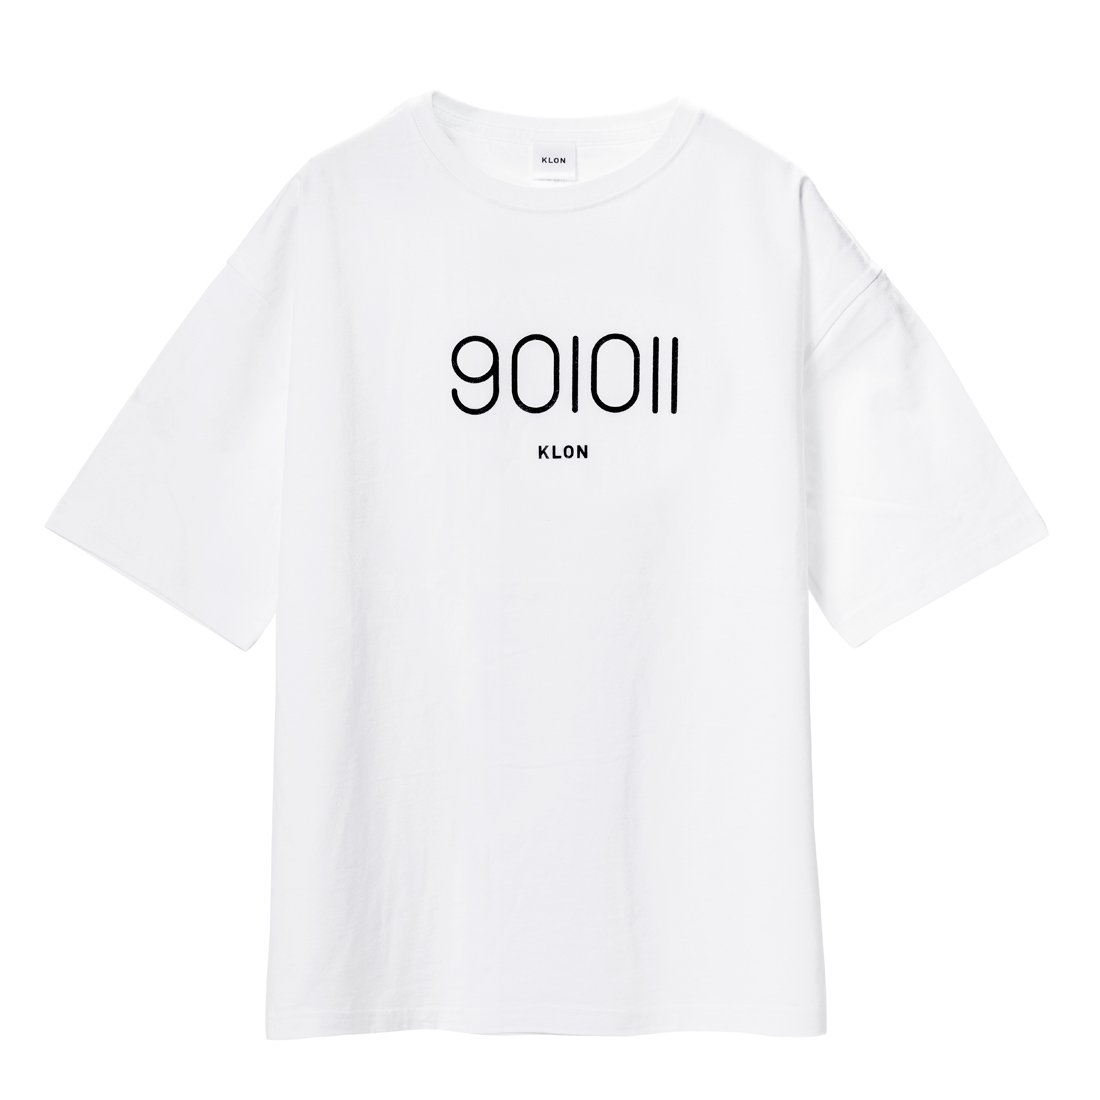 KLON Tshirts CRYPTOGRAPHY 901011 WHITE